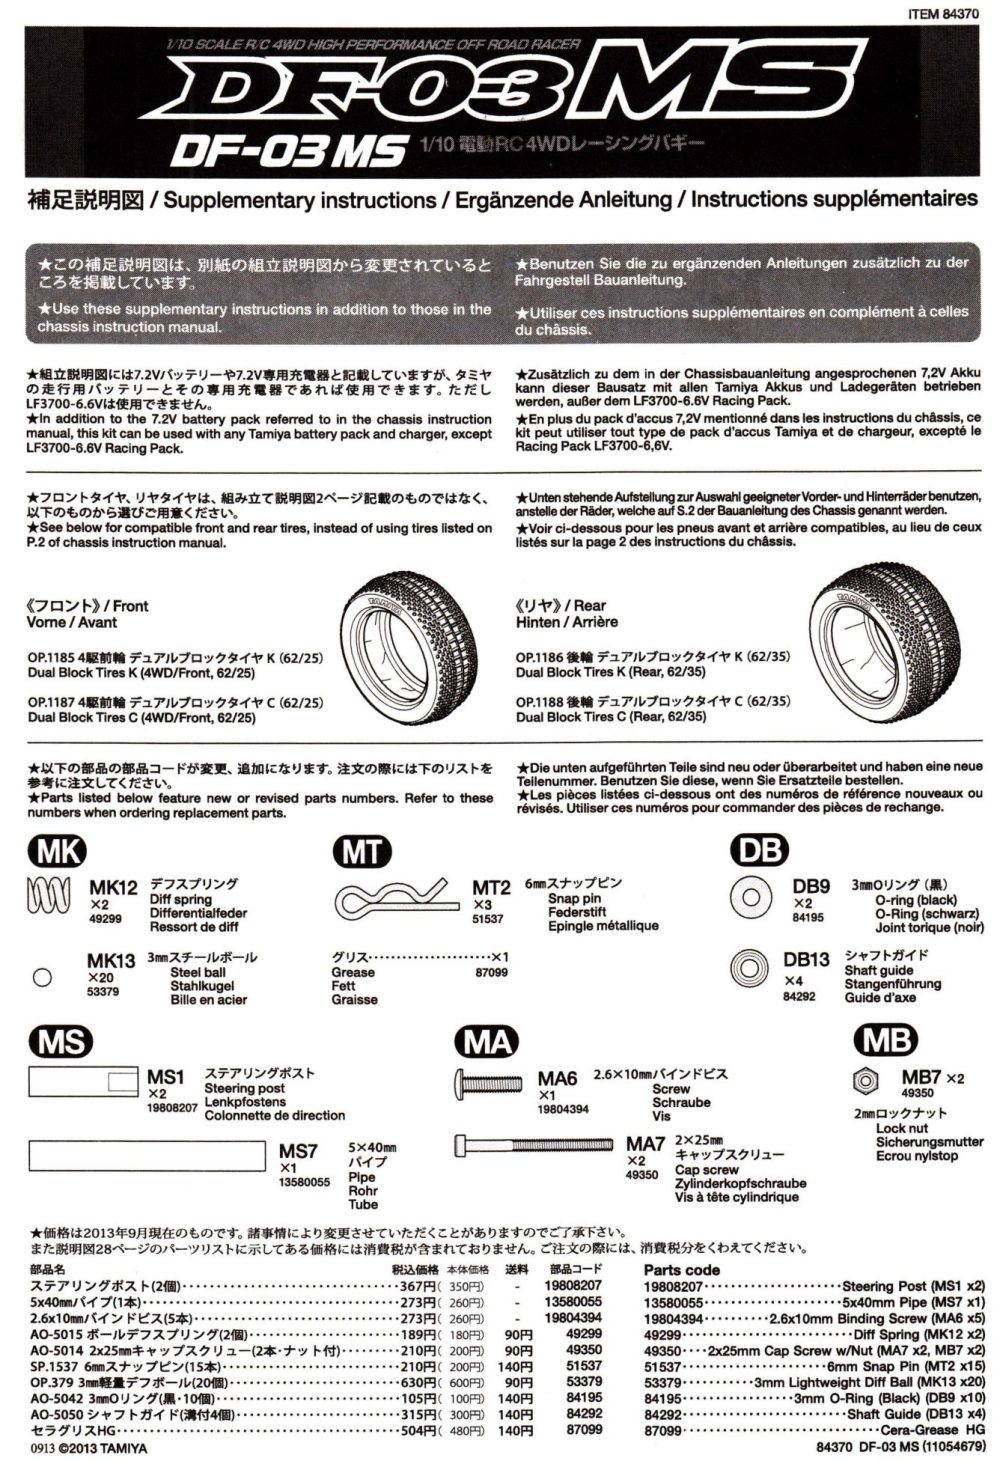 Tamiya - DF-03 MS Chassis Chassis - Manual - Page 29